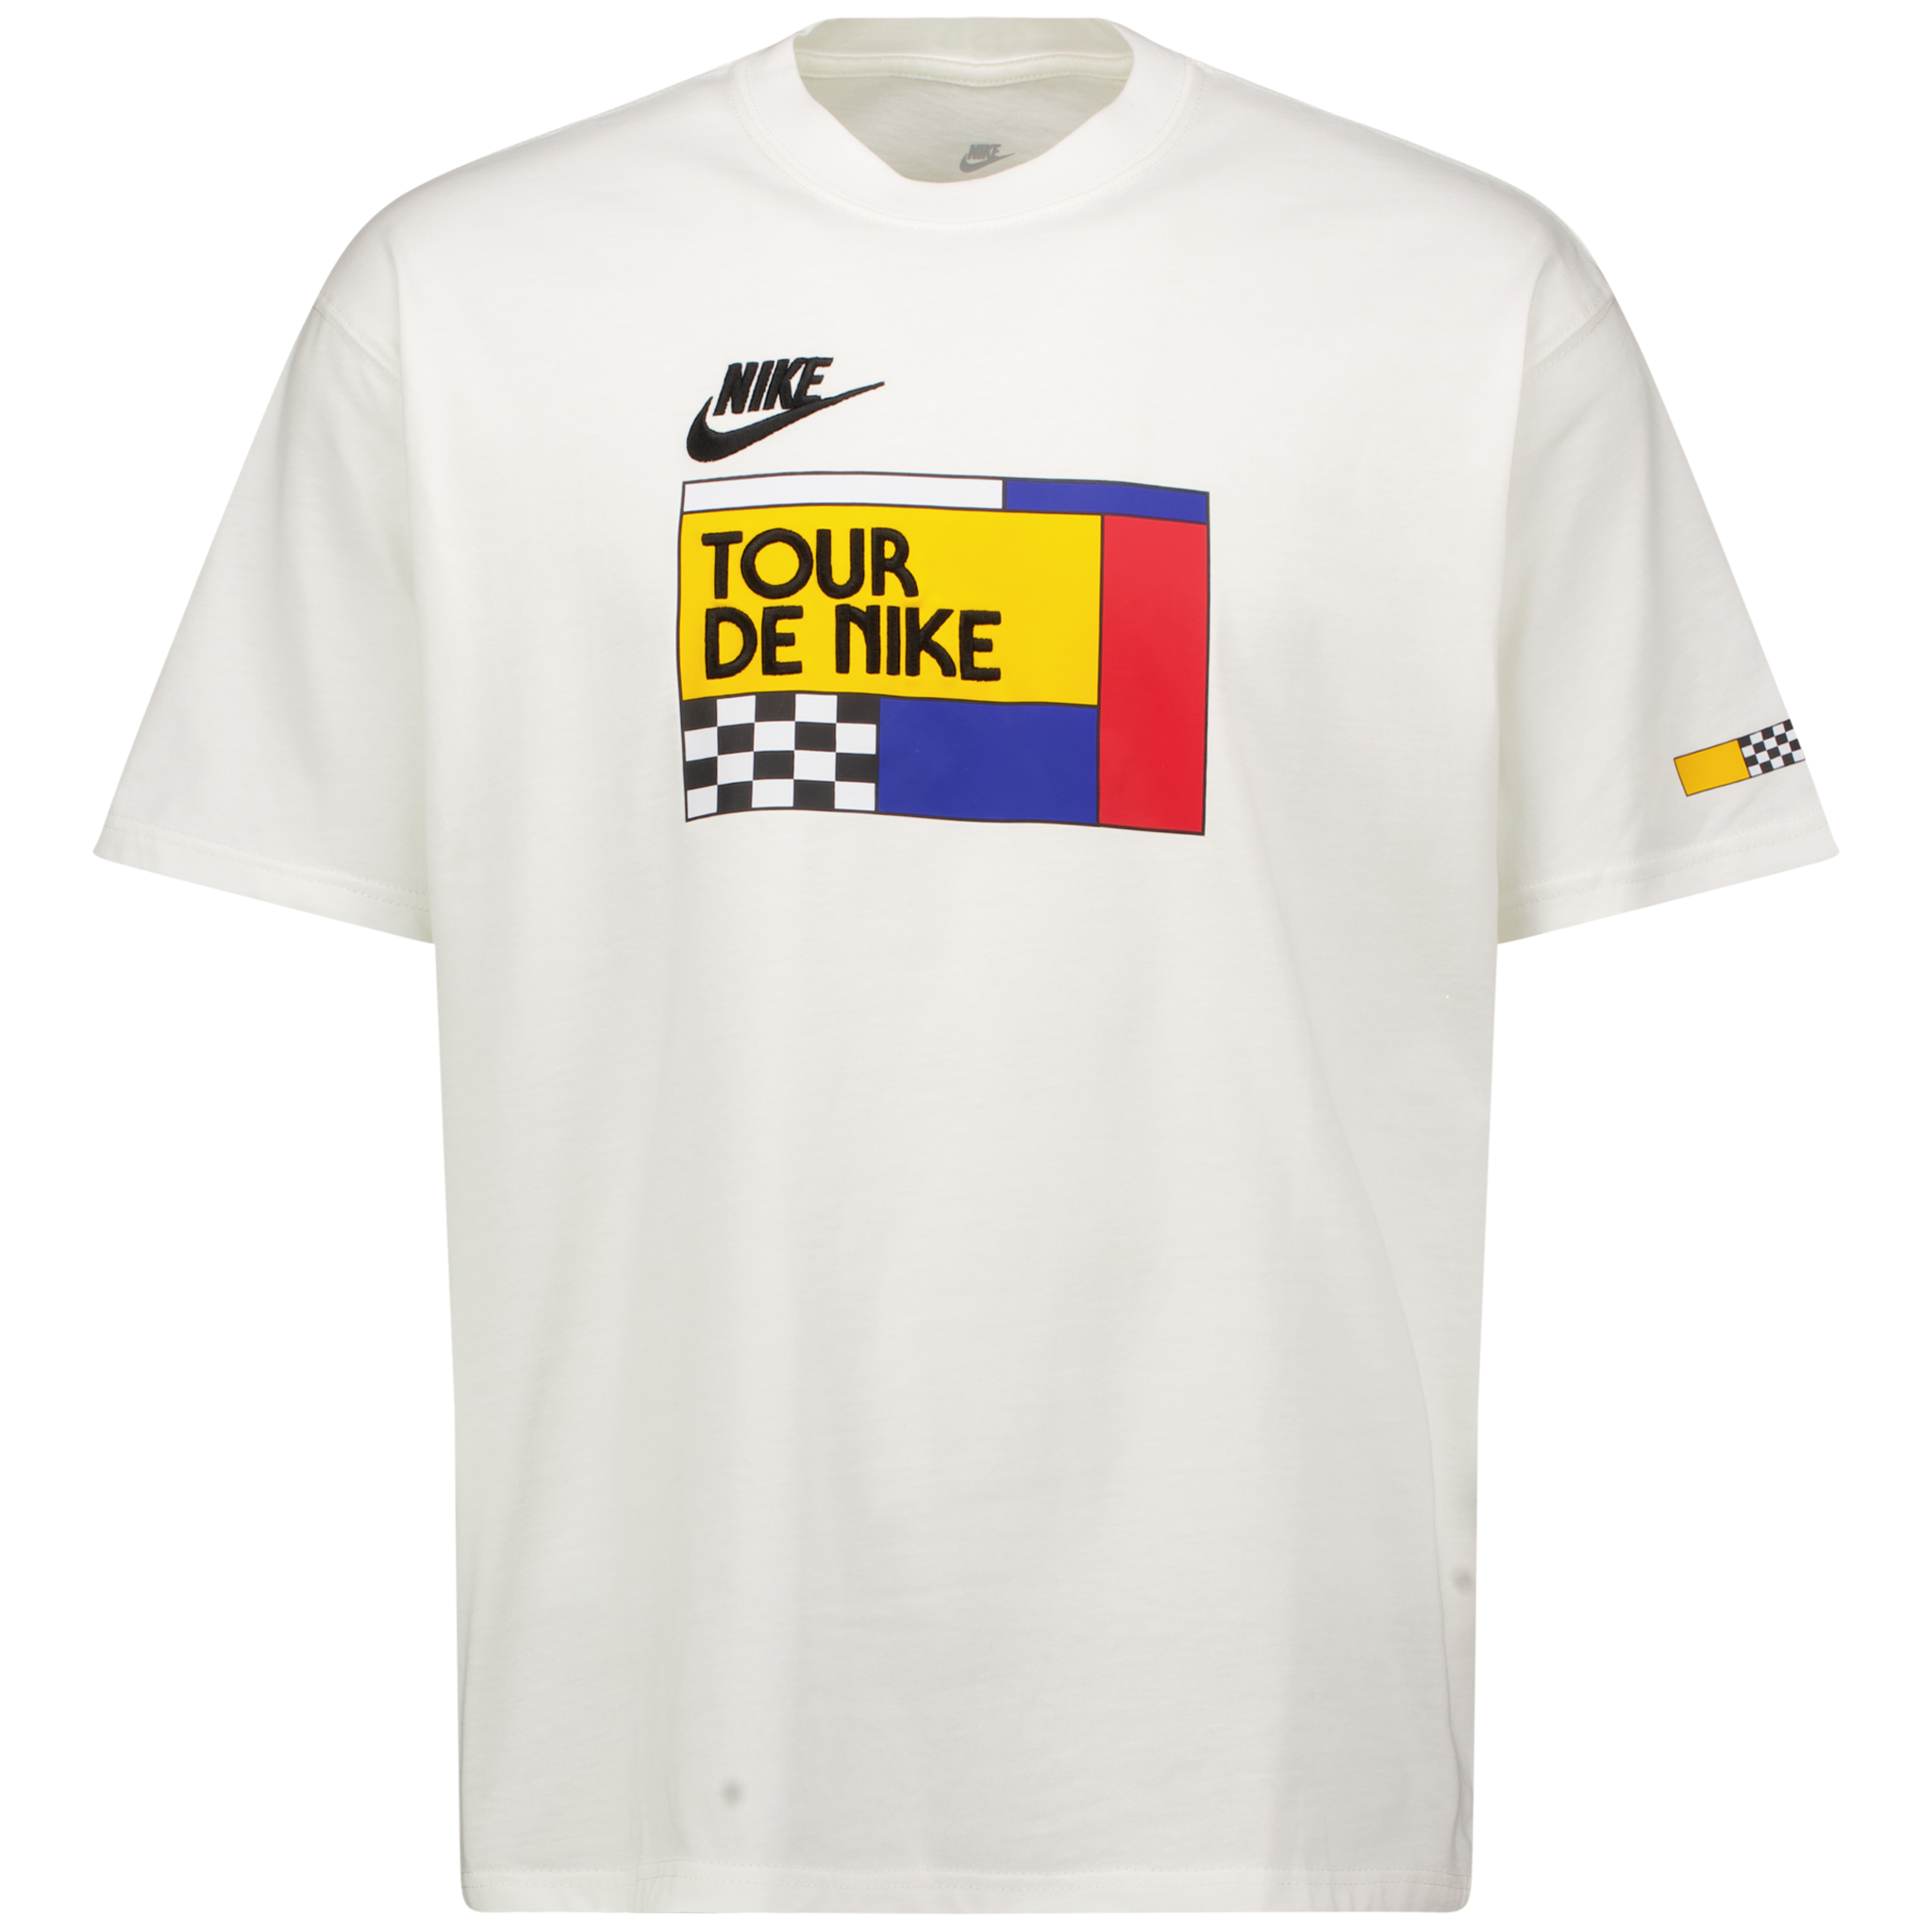 'Tour De Nike' Tee